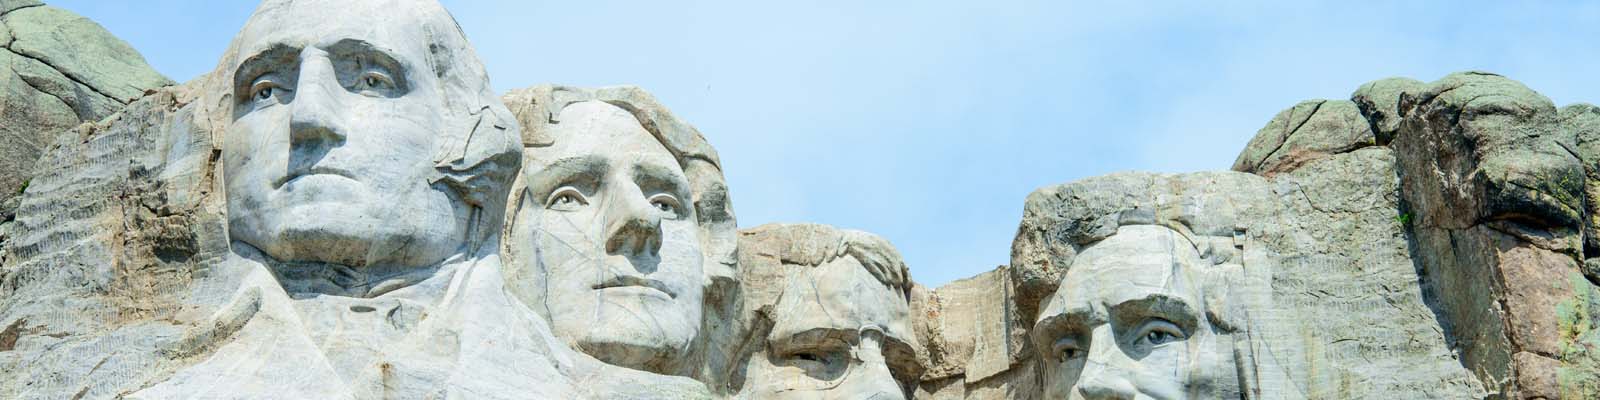 Pictured: Mt. Rushmore in South Dakota.